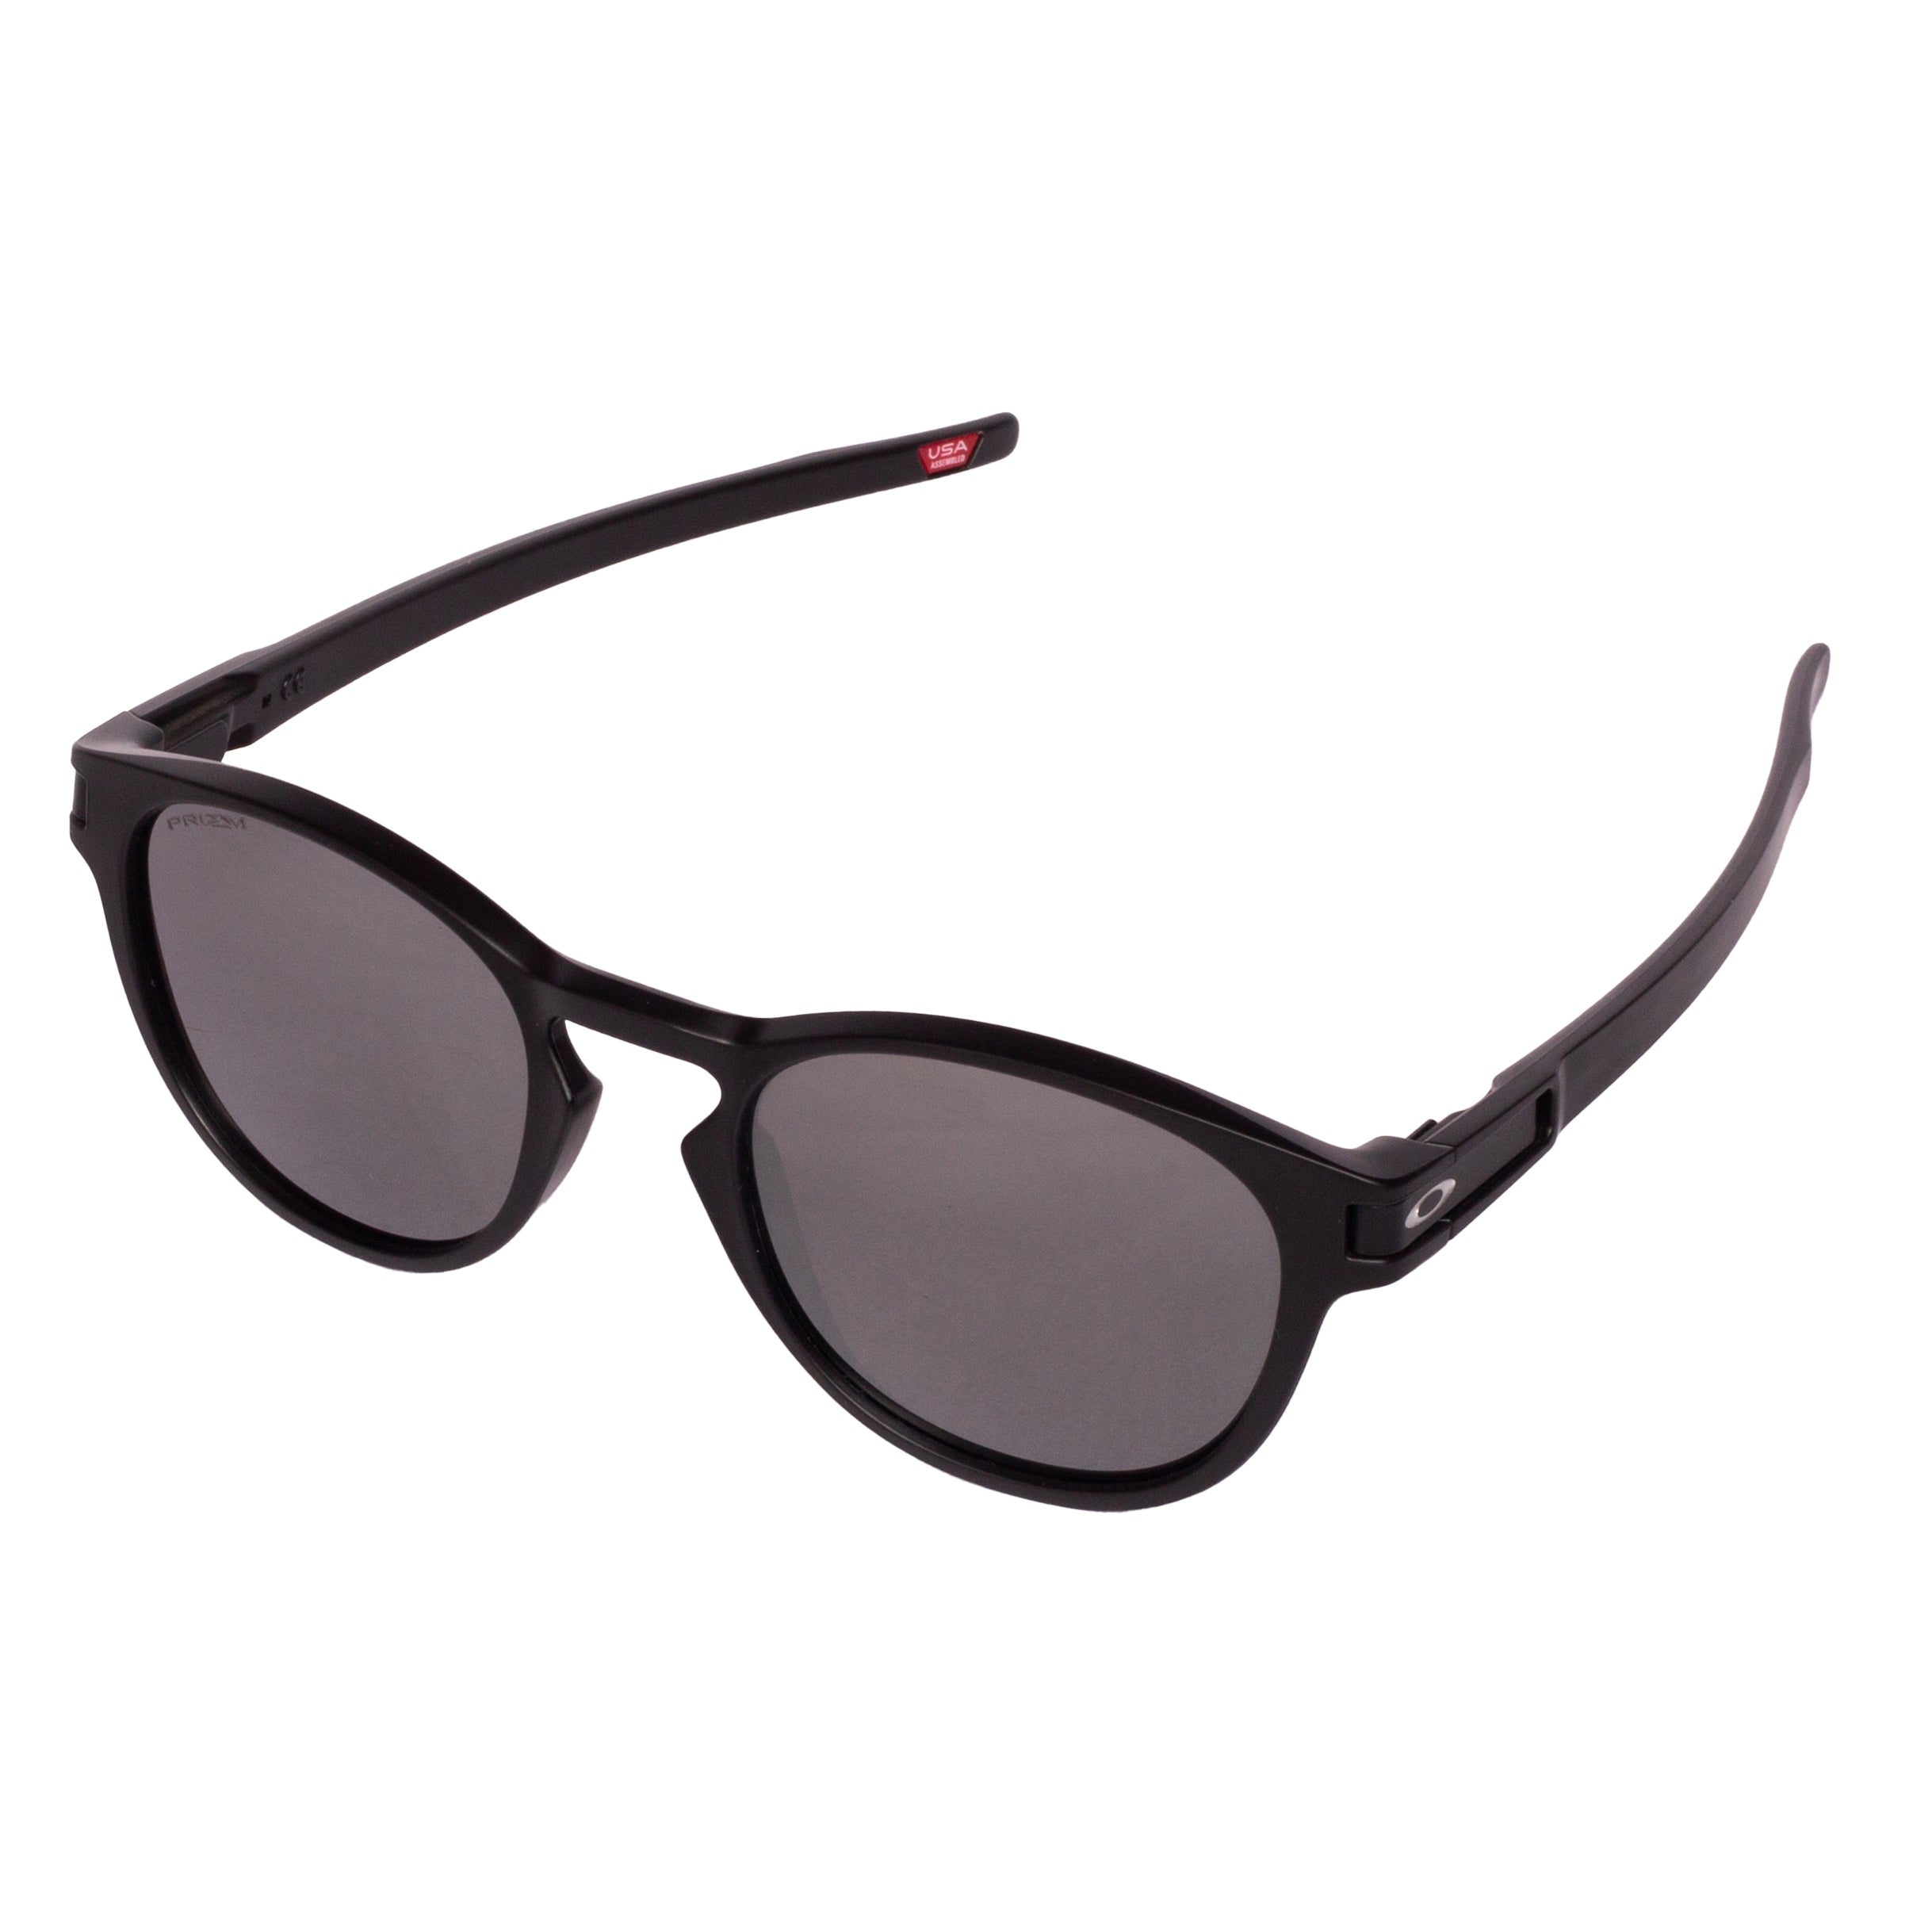 Oakley-OO9265-53-926527 Sunglasses - Premium Sunglasses from Oakley - Just Rs. 9790! Shop now at Laxmi Opticians